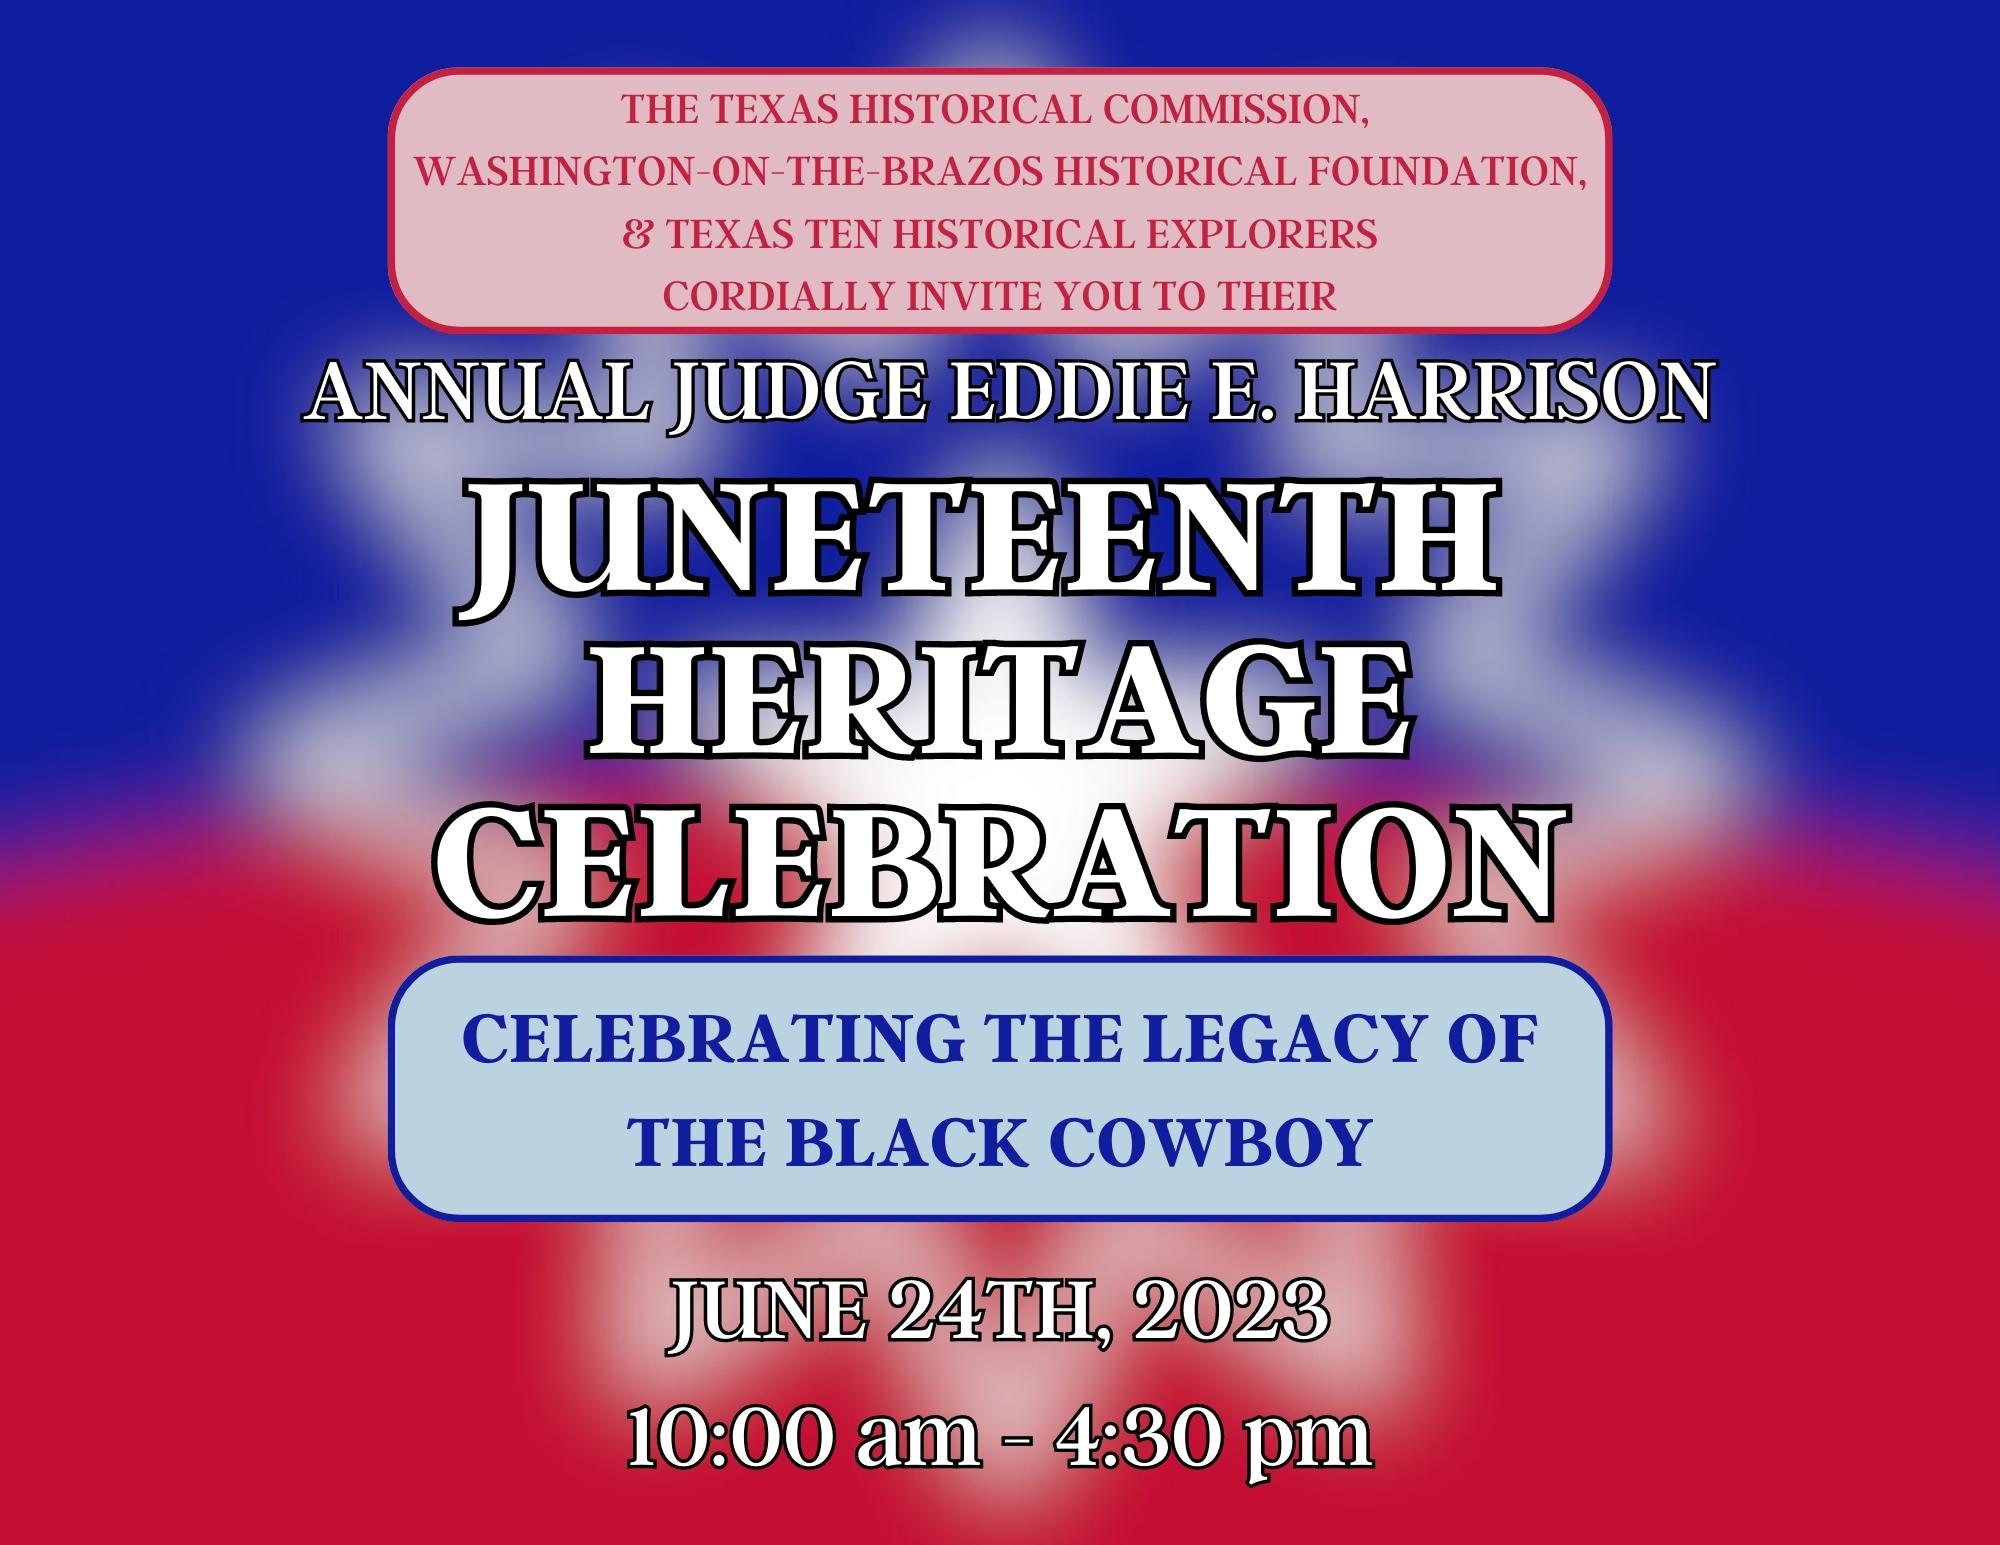 Judge Eddie E. Harrison Juneteenth Heritage Celebration